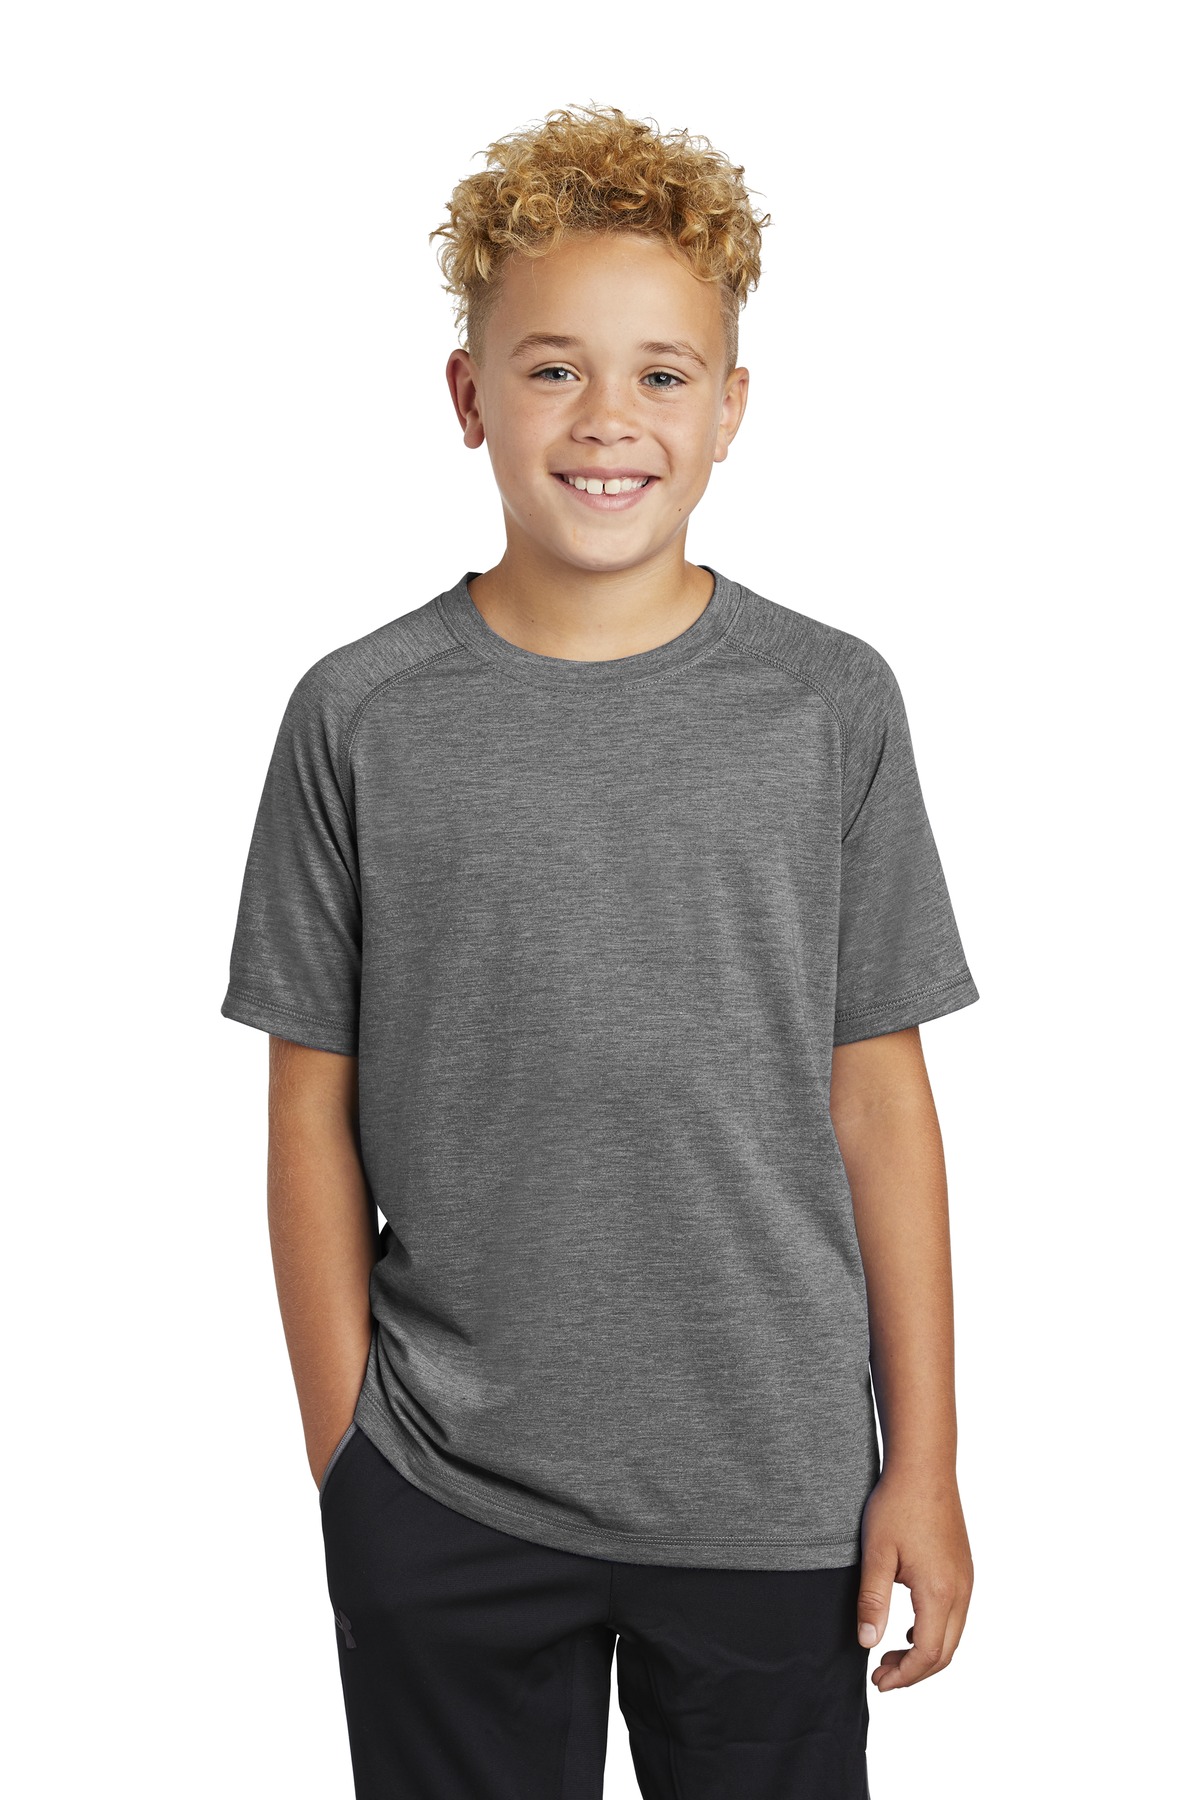 Sport-Tek Activewear Youth T-Shirts for Hospitality ® Youth PosiCharge ® Tri-Blend Wicking Raglan Tee.-Sport-Tek